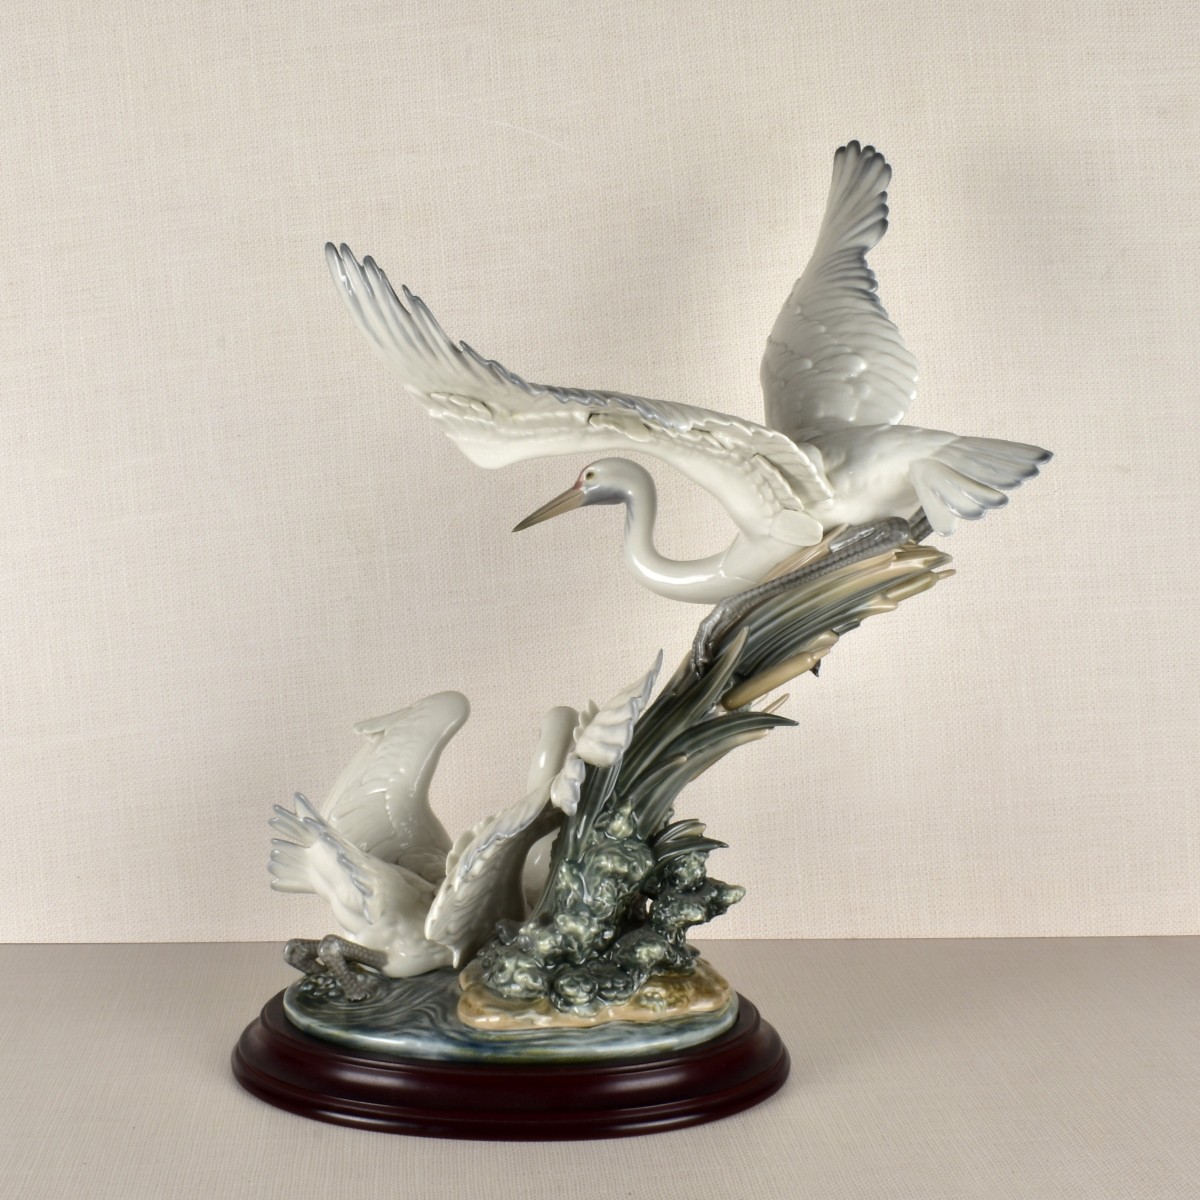 Lladro "Courting Cranes" Figurine